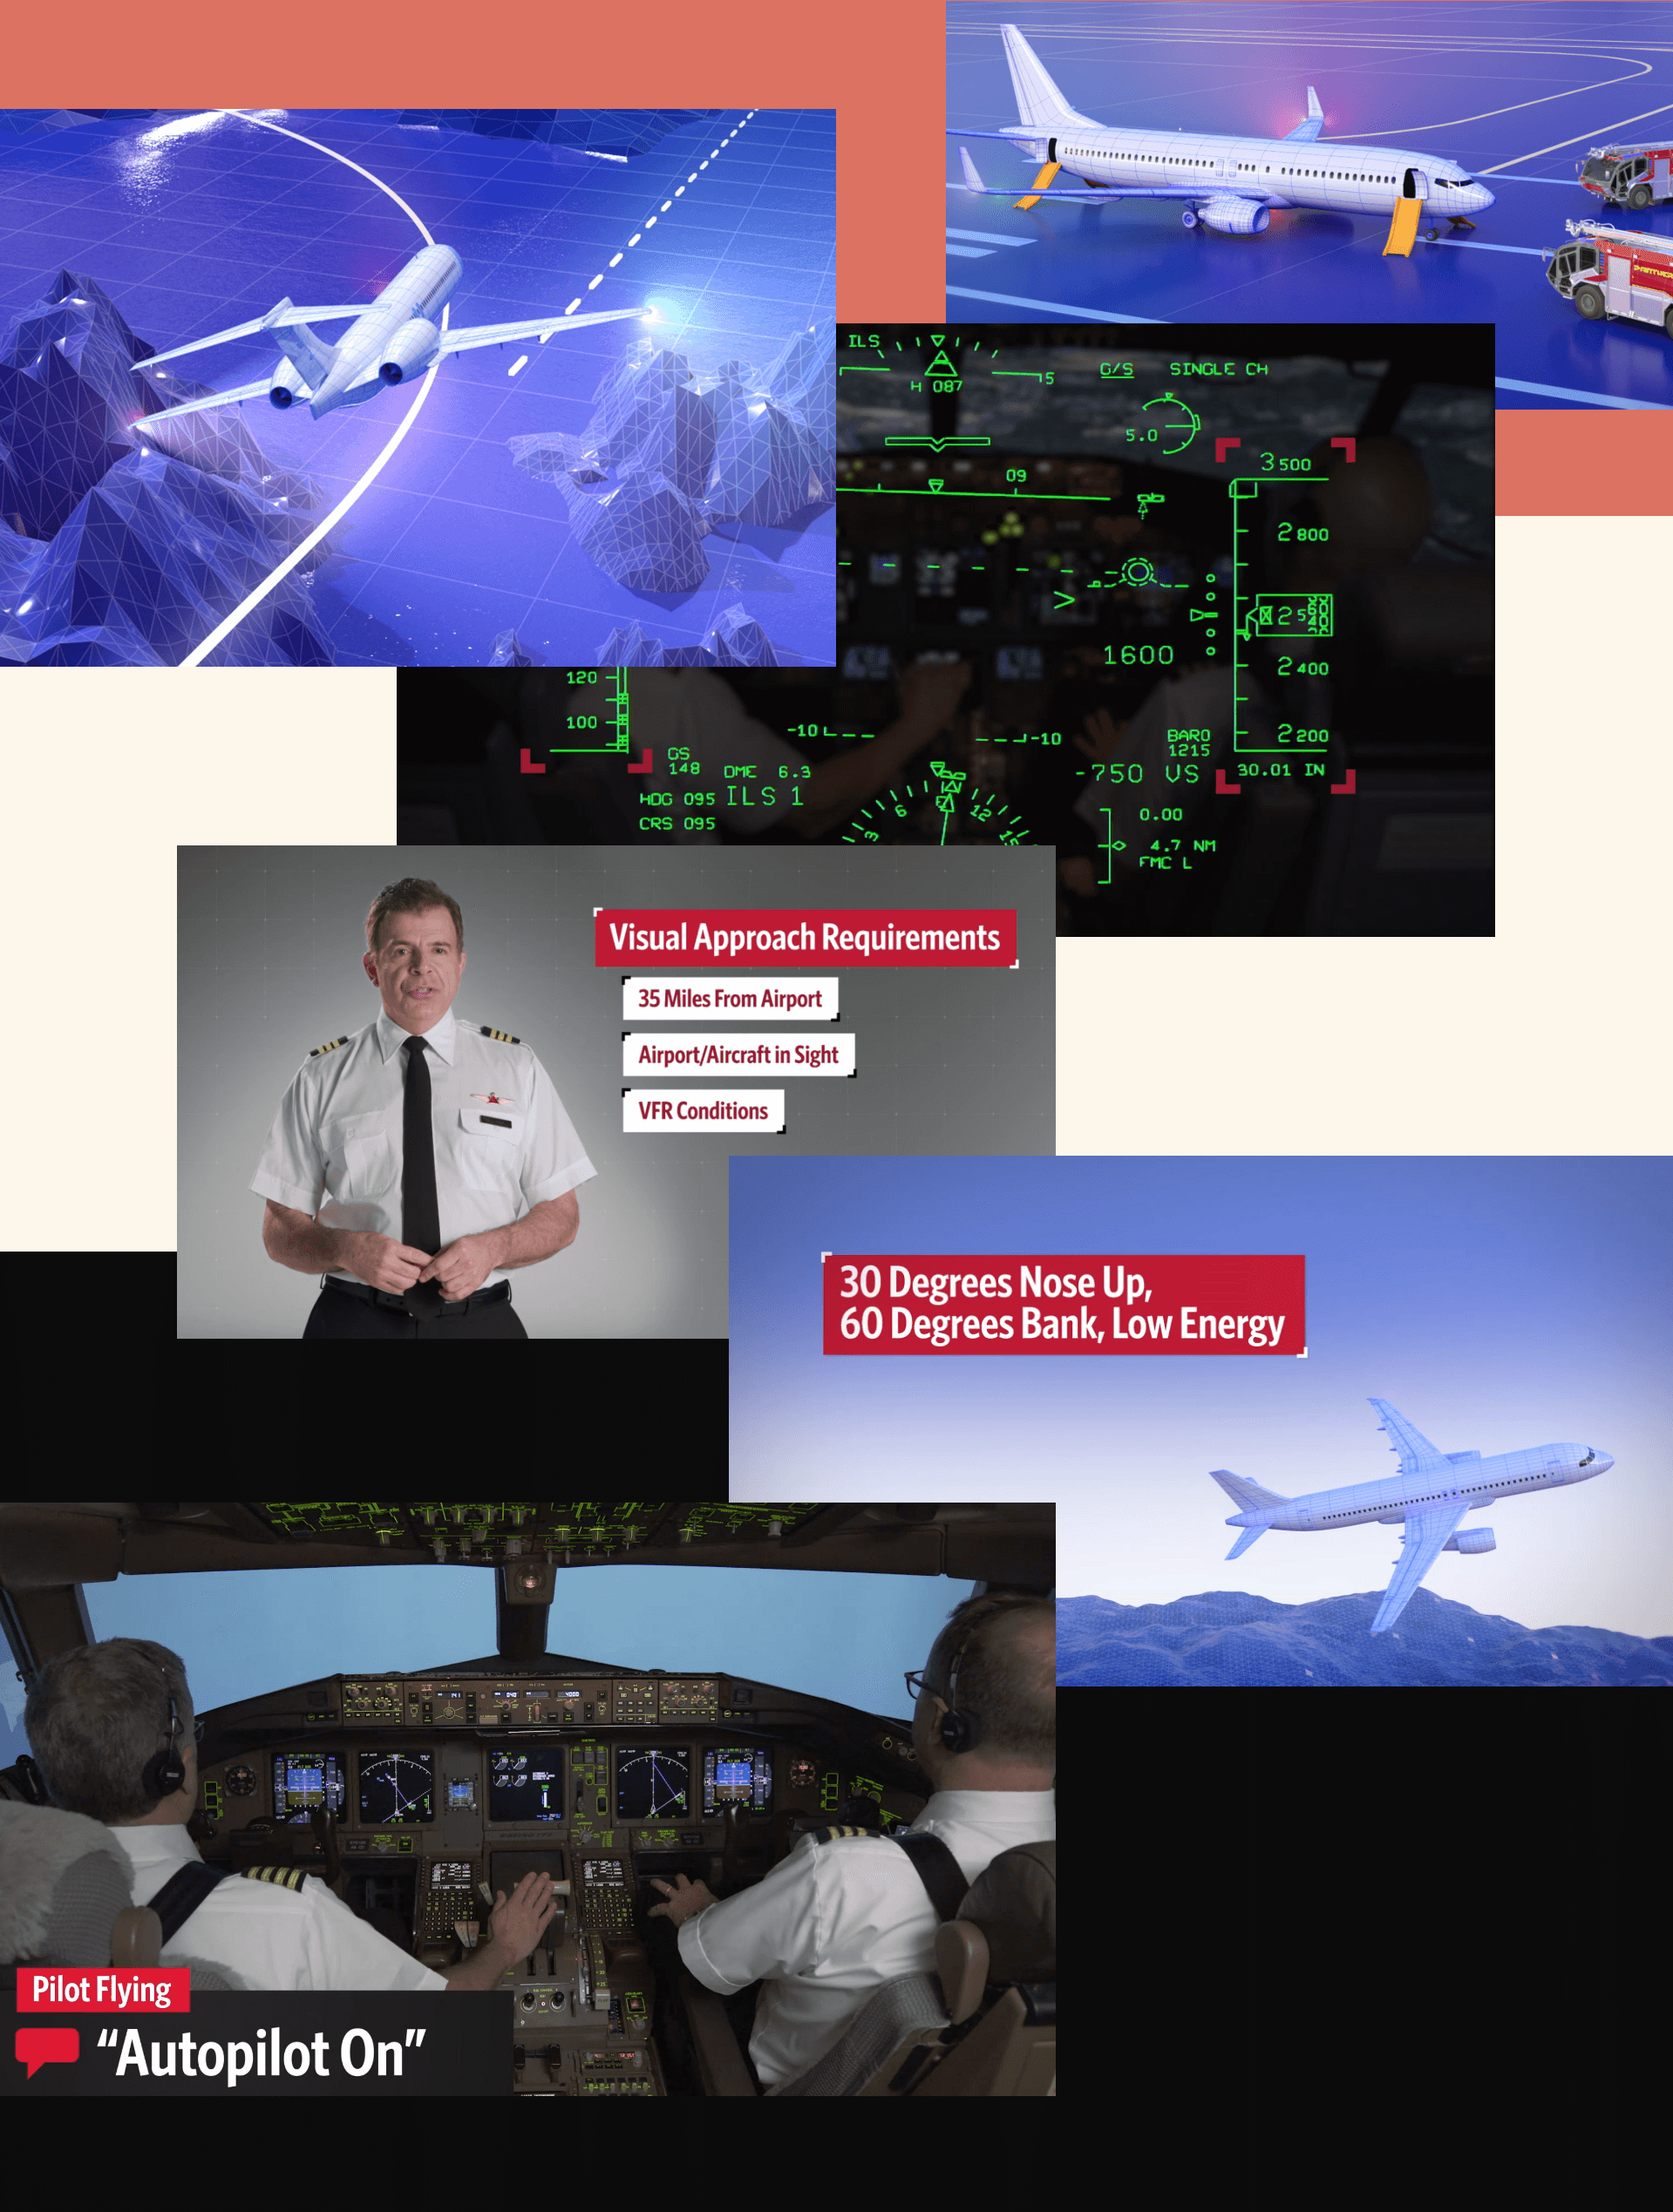 Delta eBrief Case Study Screenshots